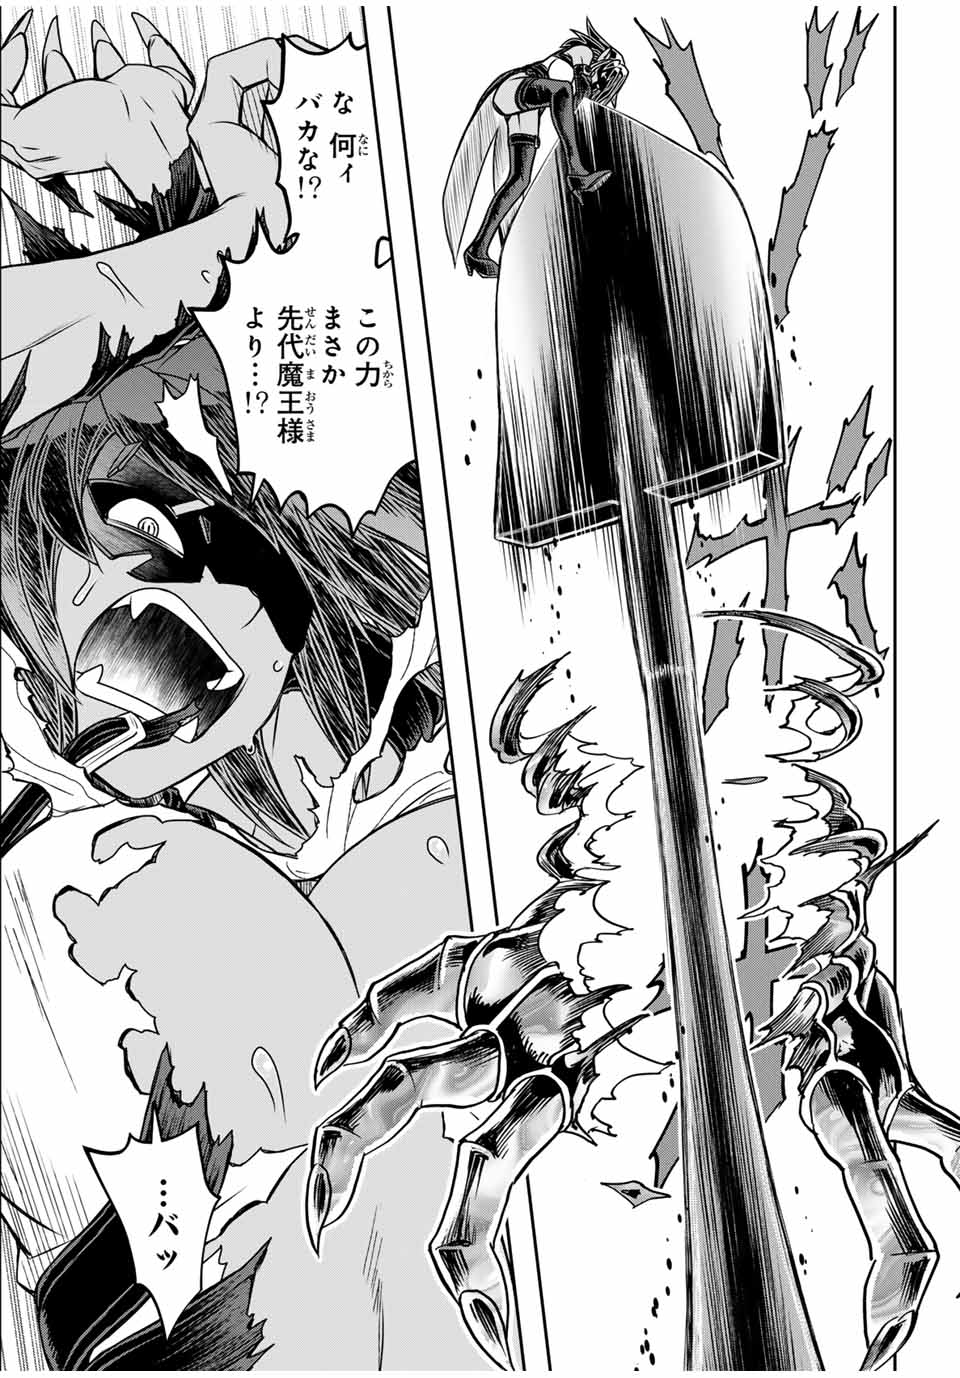 Nengan no Akuyaku Reijou (Last Boss) no Karada wo Teniiretazo!  - Chapter 27 - Page 15